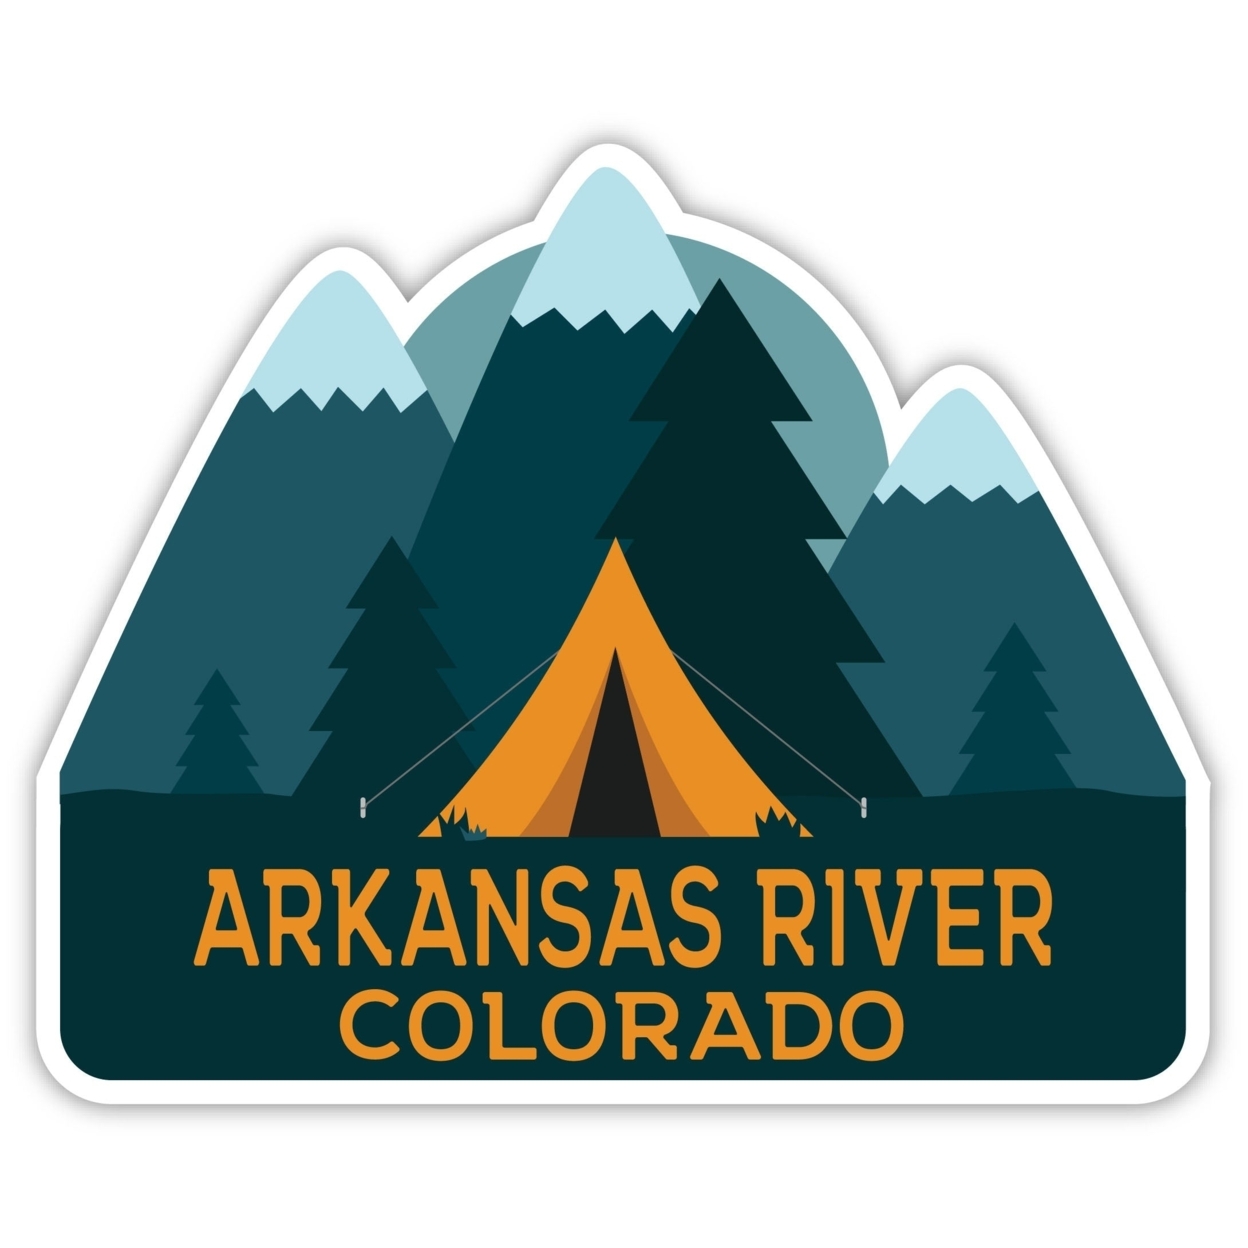 Arkansas River Colorado Souvenir Decorative Stickers (Choose Theme And Size) - 4-Pack, 4-Inch, Tent